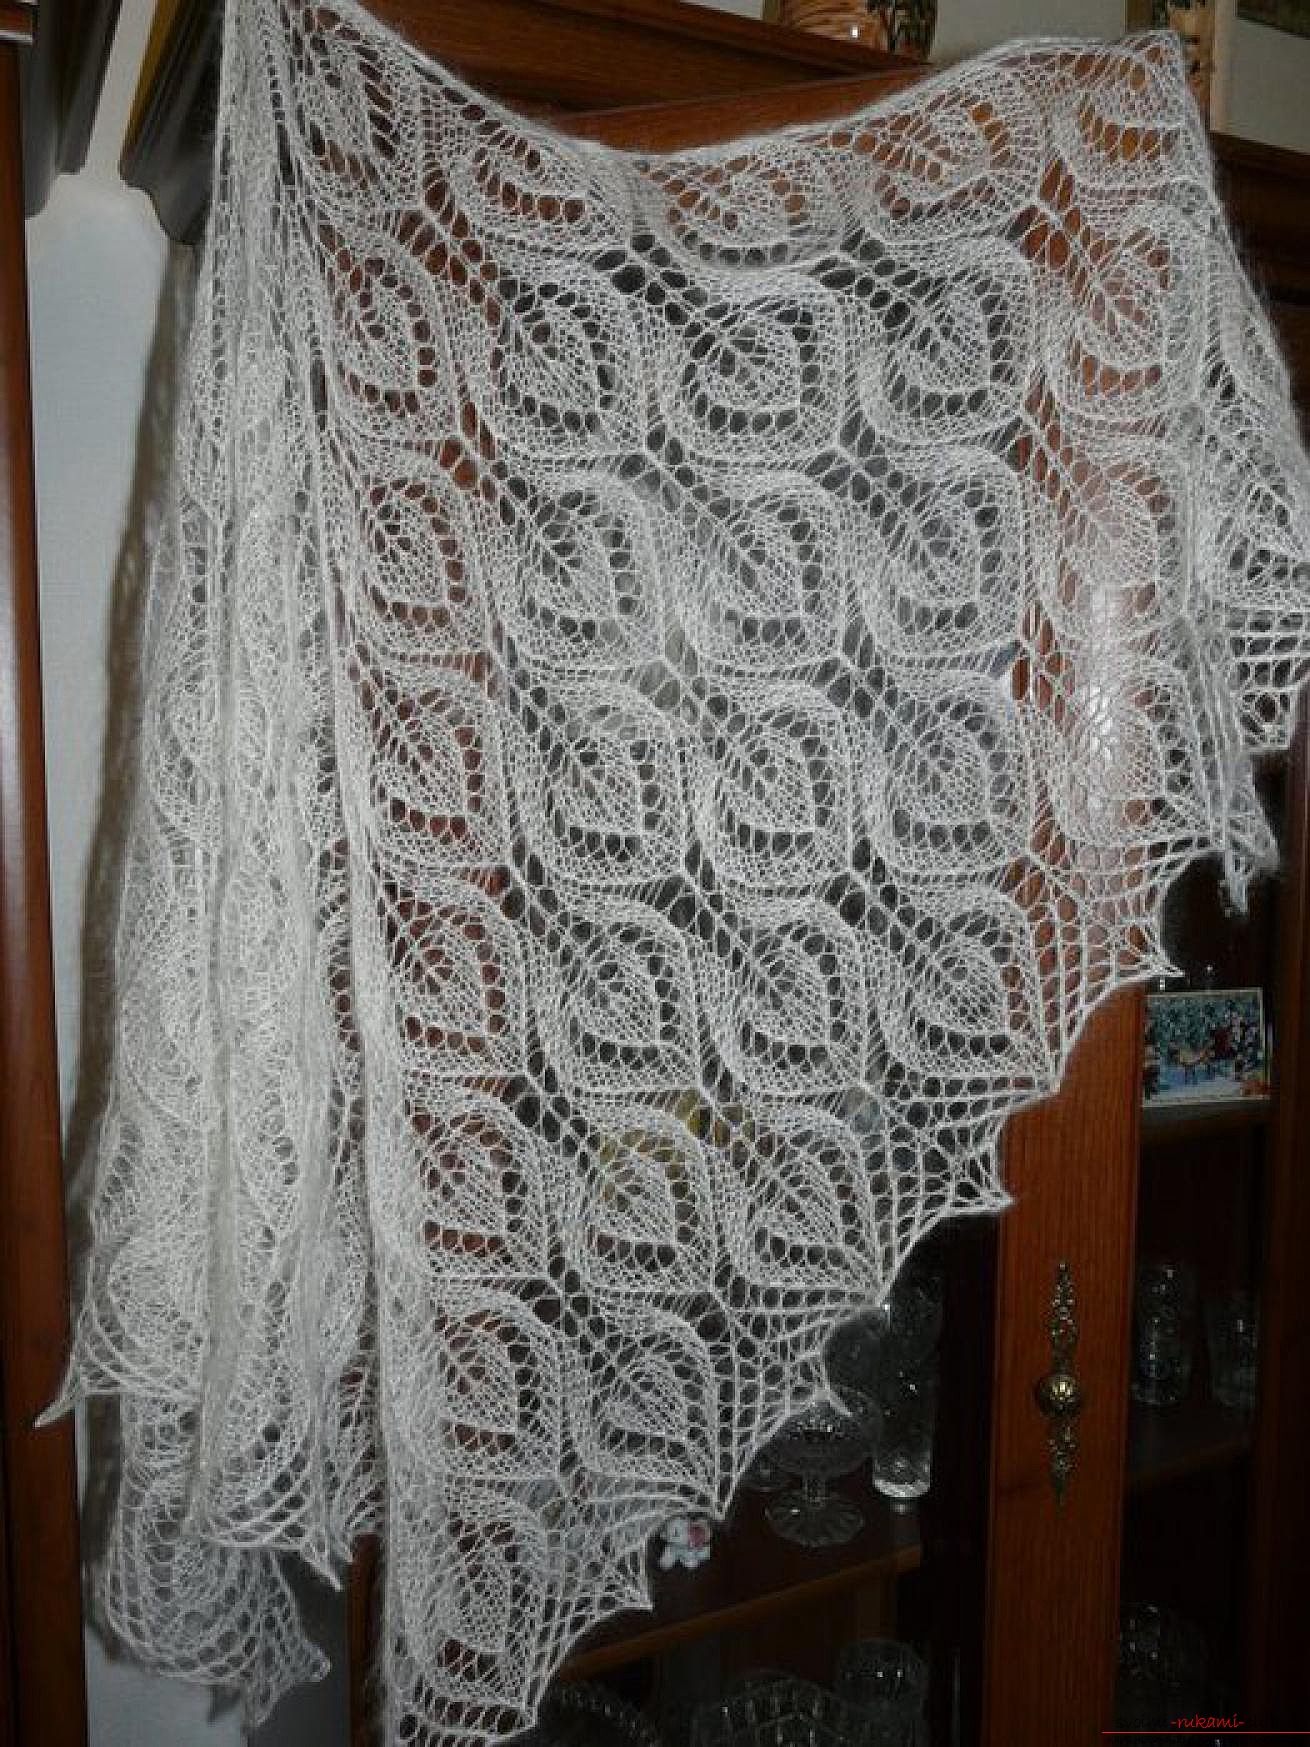 knitted knitting needles for women. Photo №1